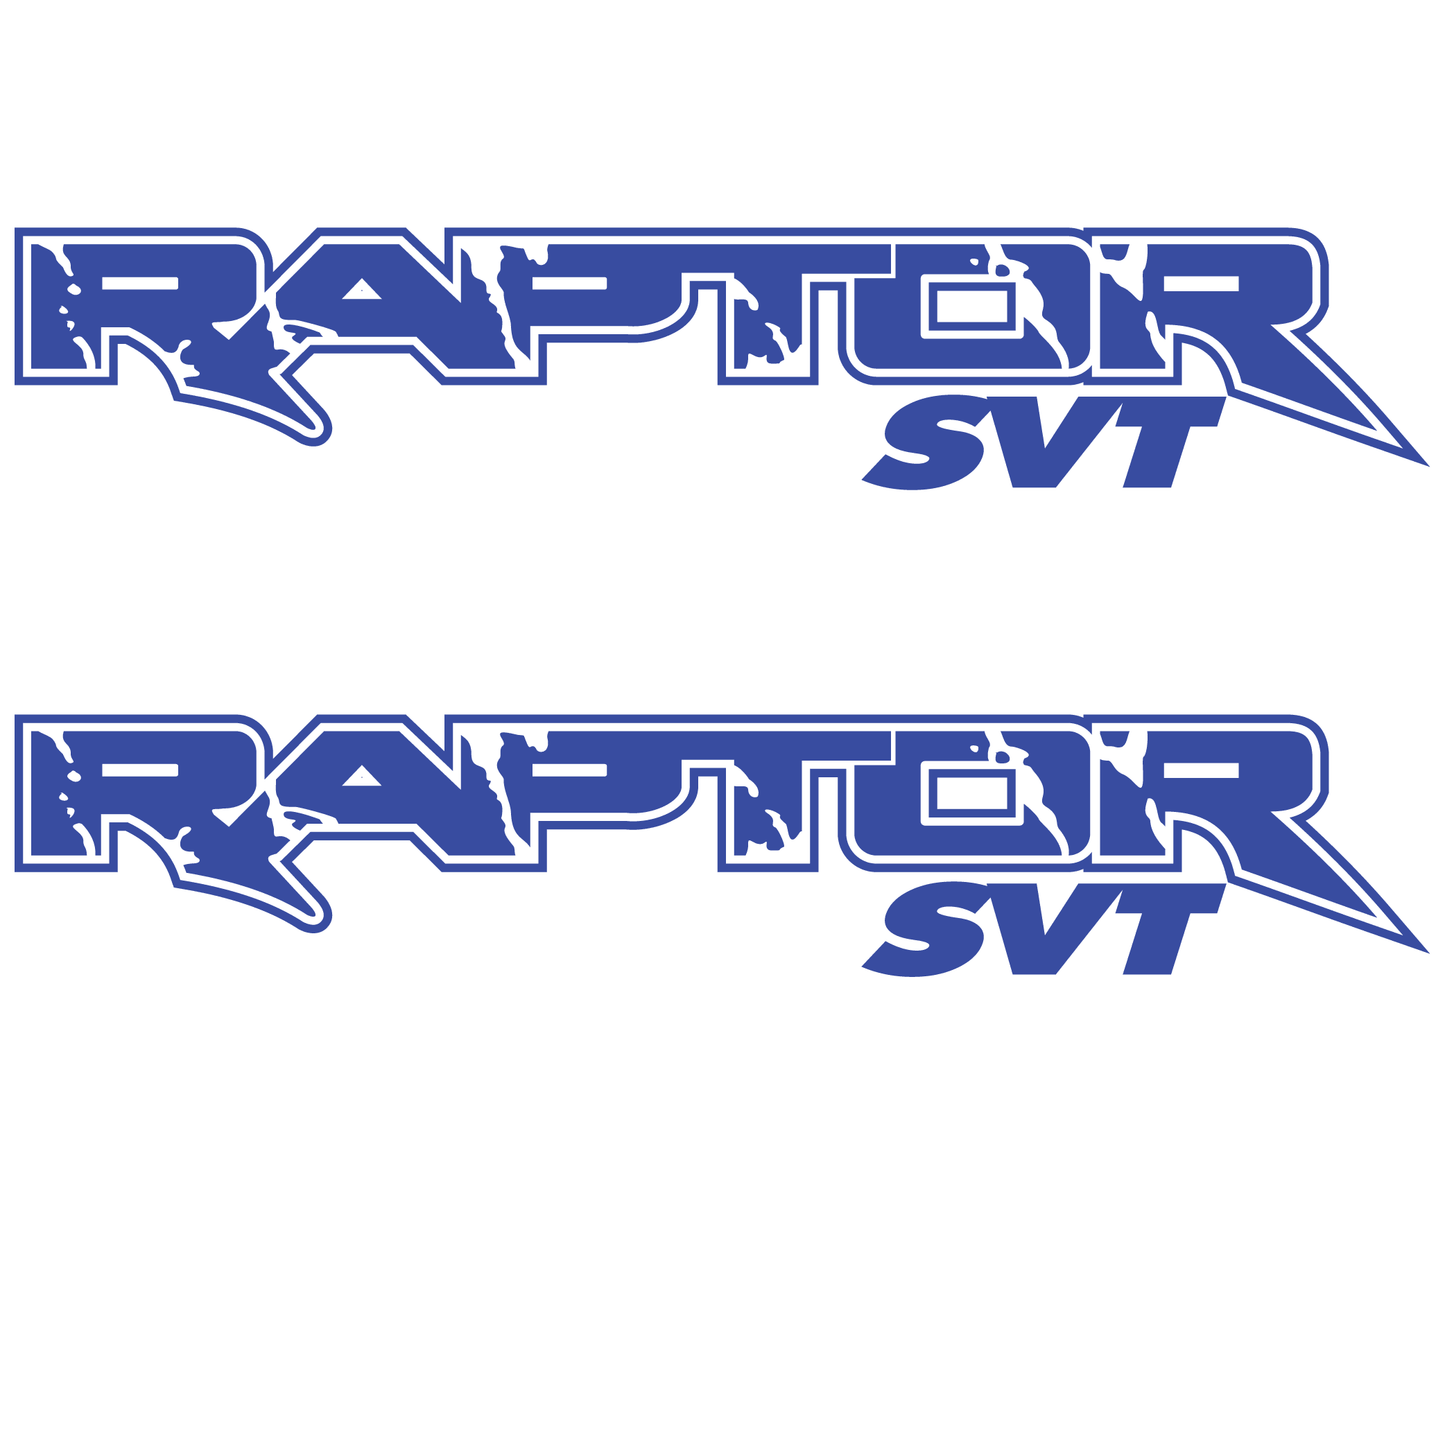 Shop Vinyl Design F-150 Raptor SVT Replacement Bedside Decals #010 Vehicle Decal Brilliant Blue Gloss Shop Vinyl Design decals stickers